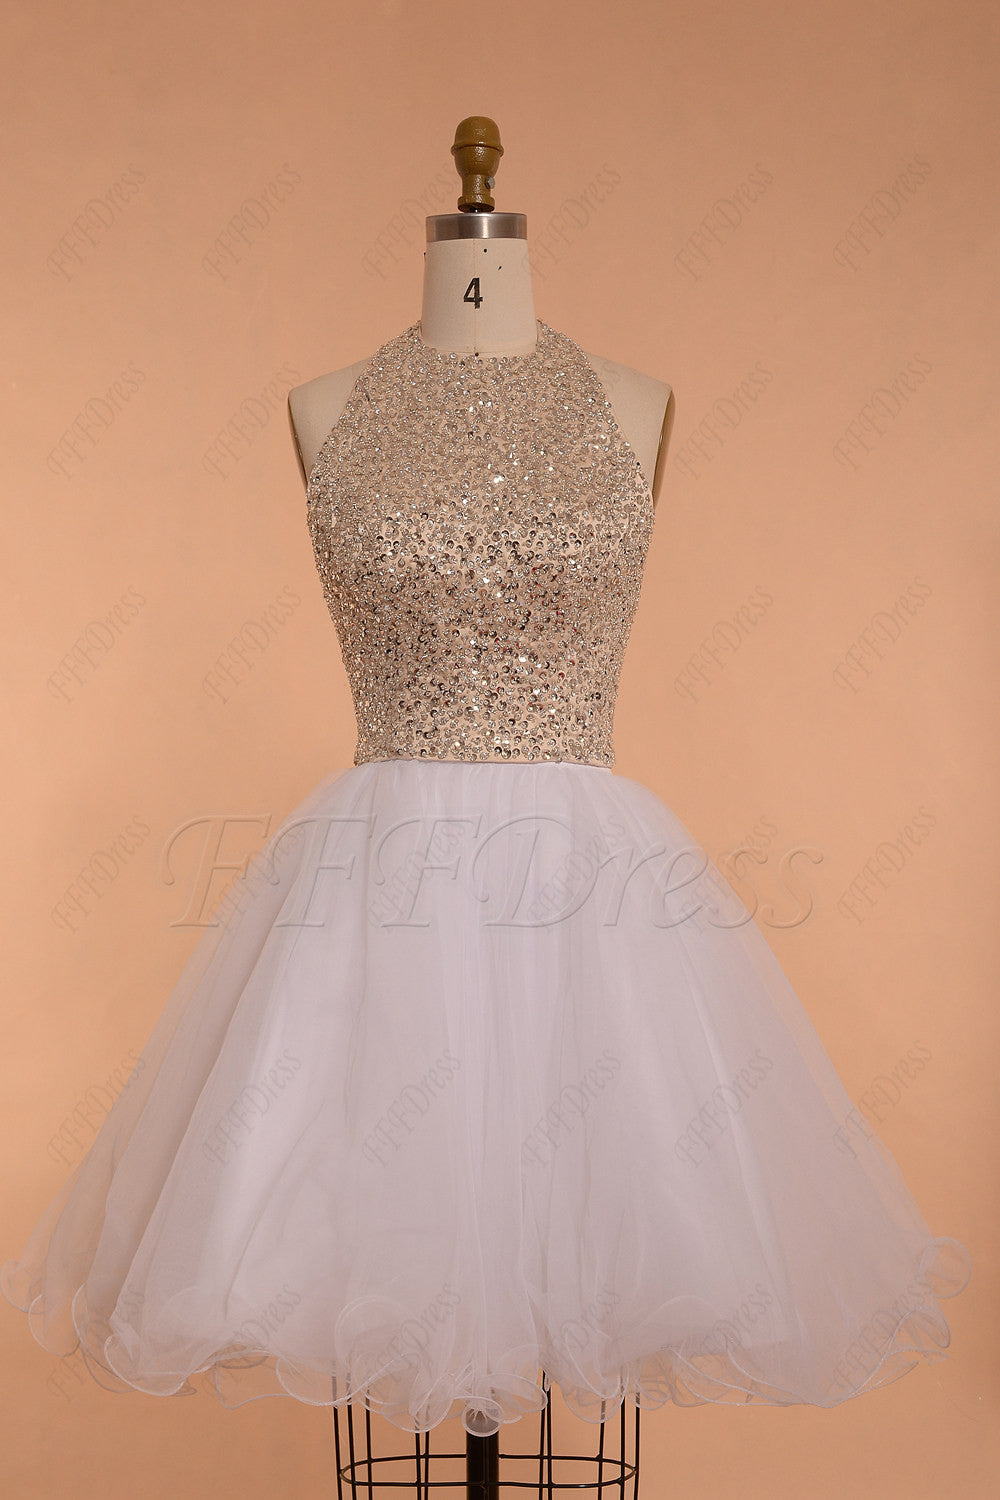 Halter backless beaded crystal white short prom dress homecoming dresses